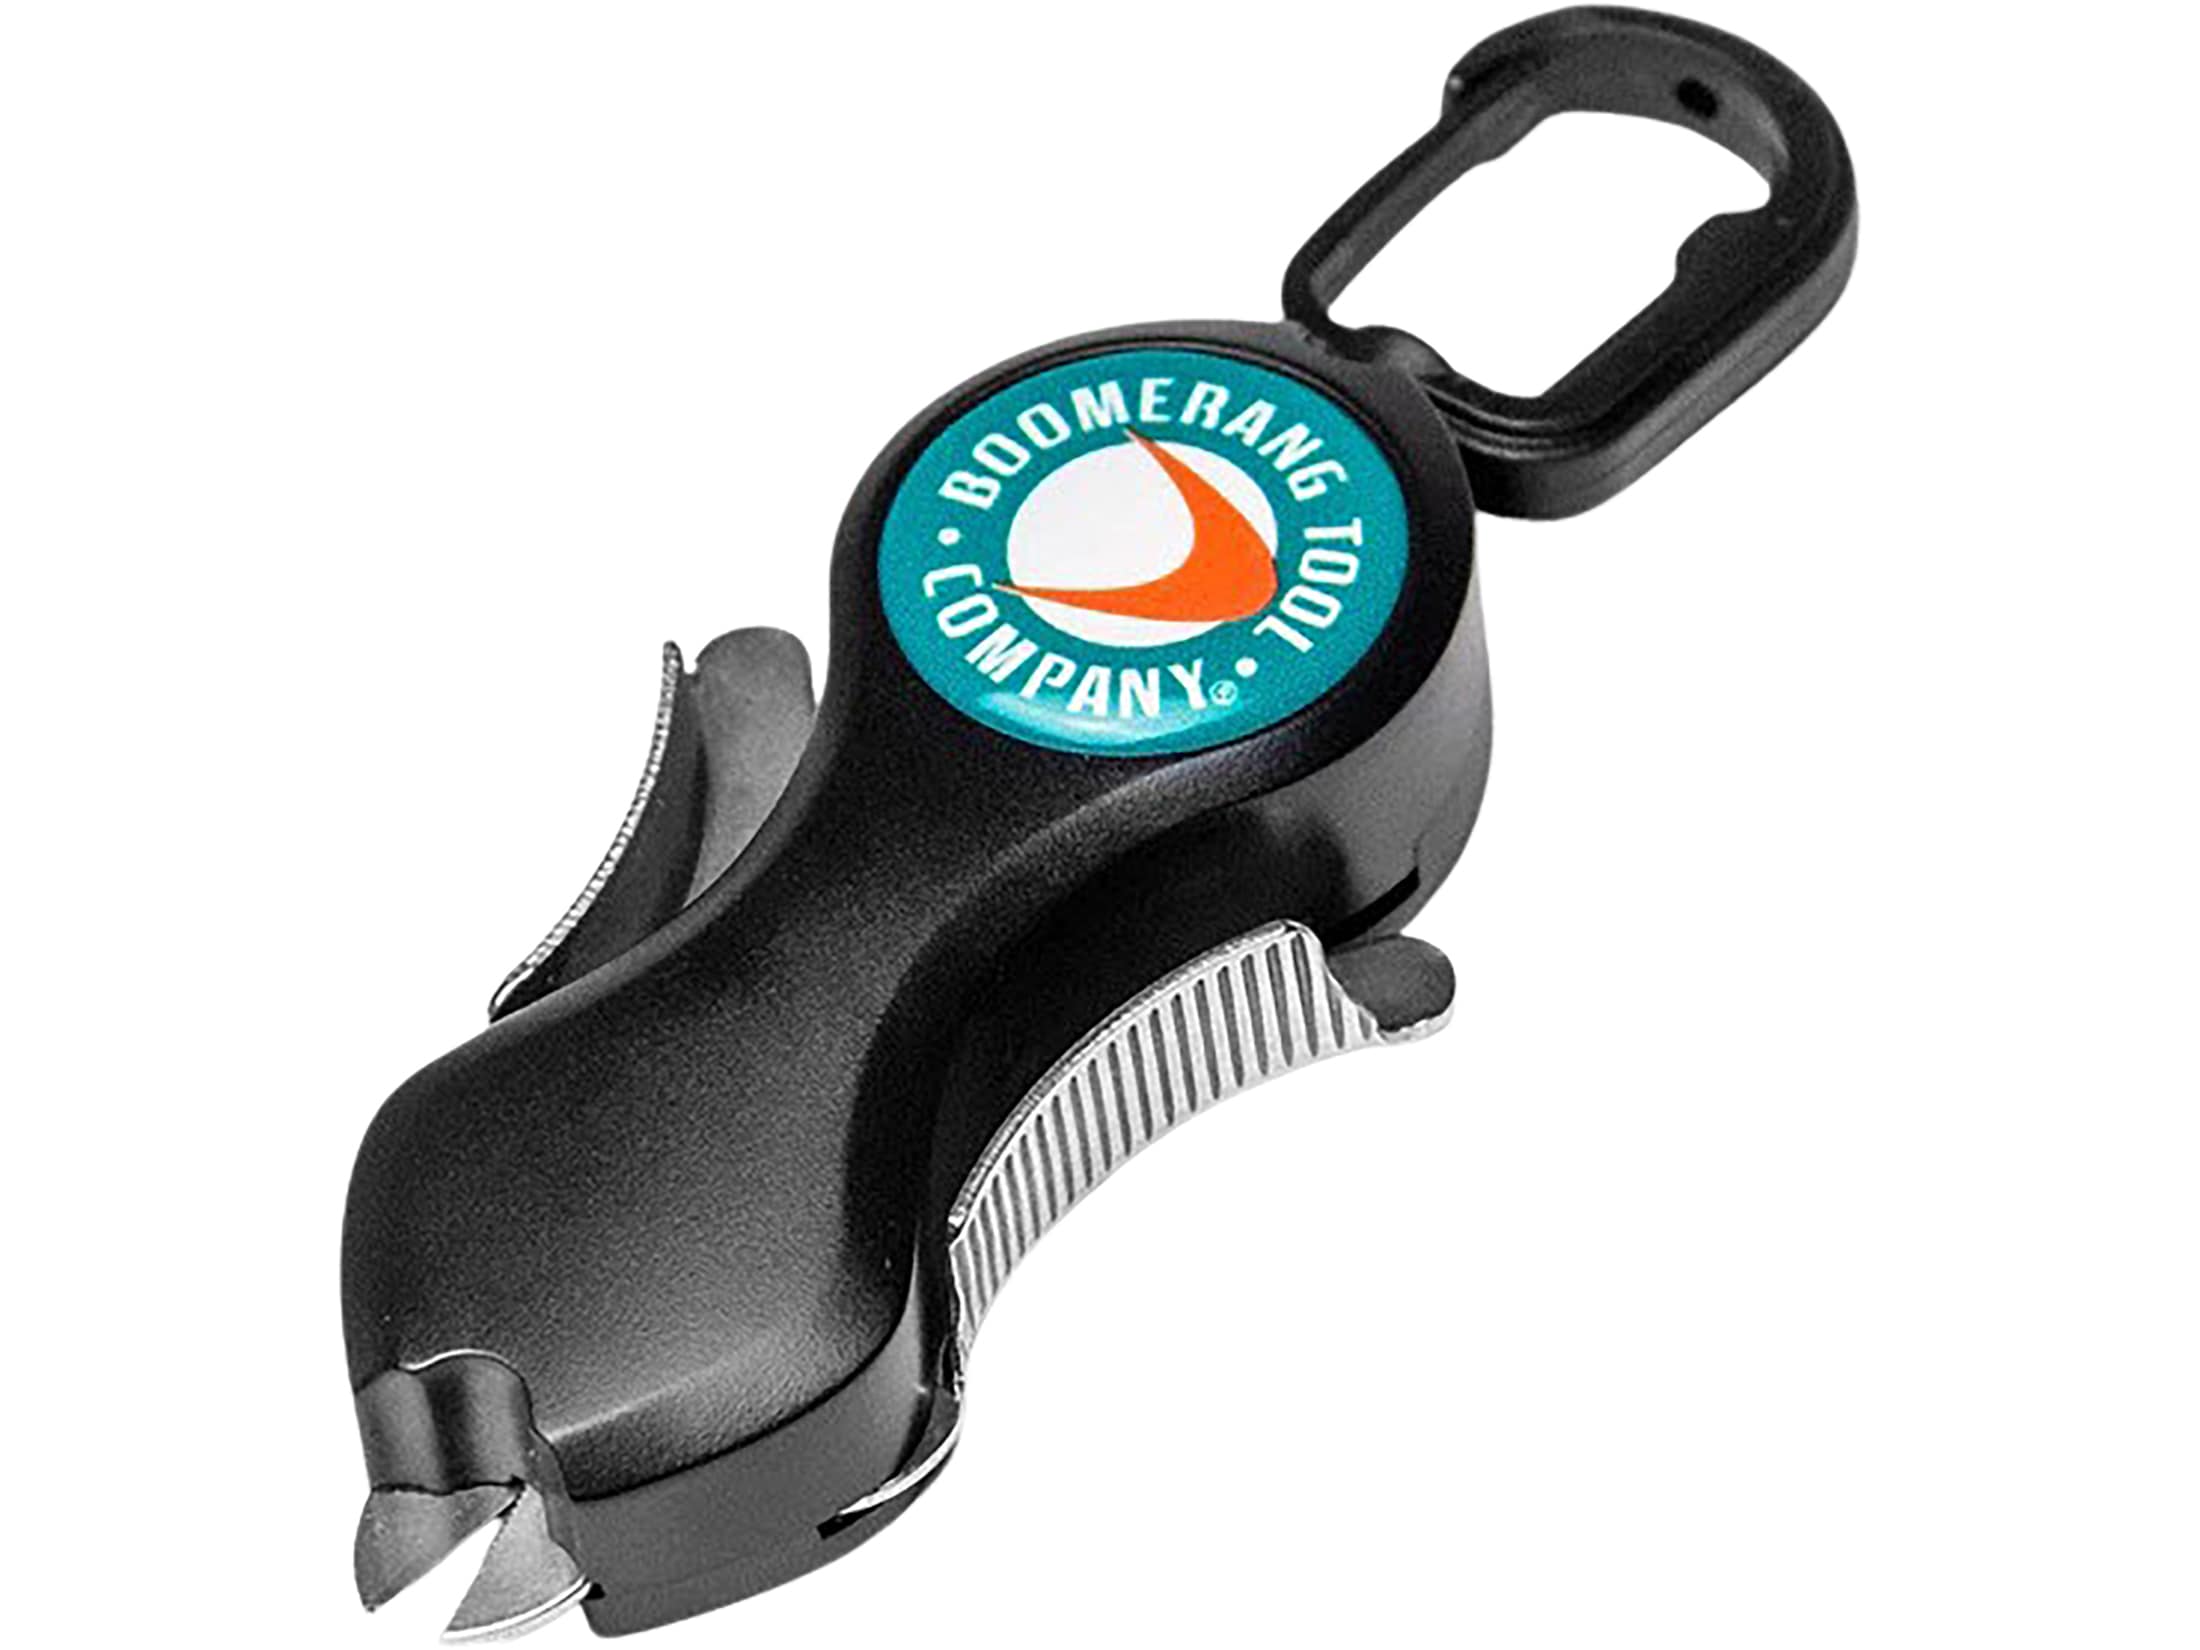 Boomerang Tool Company Original Snip Fishing Line Cutter